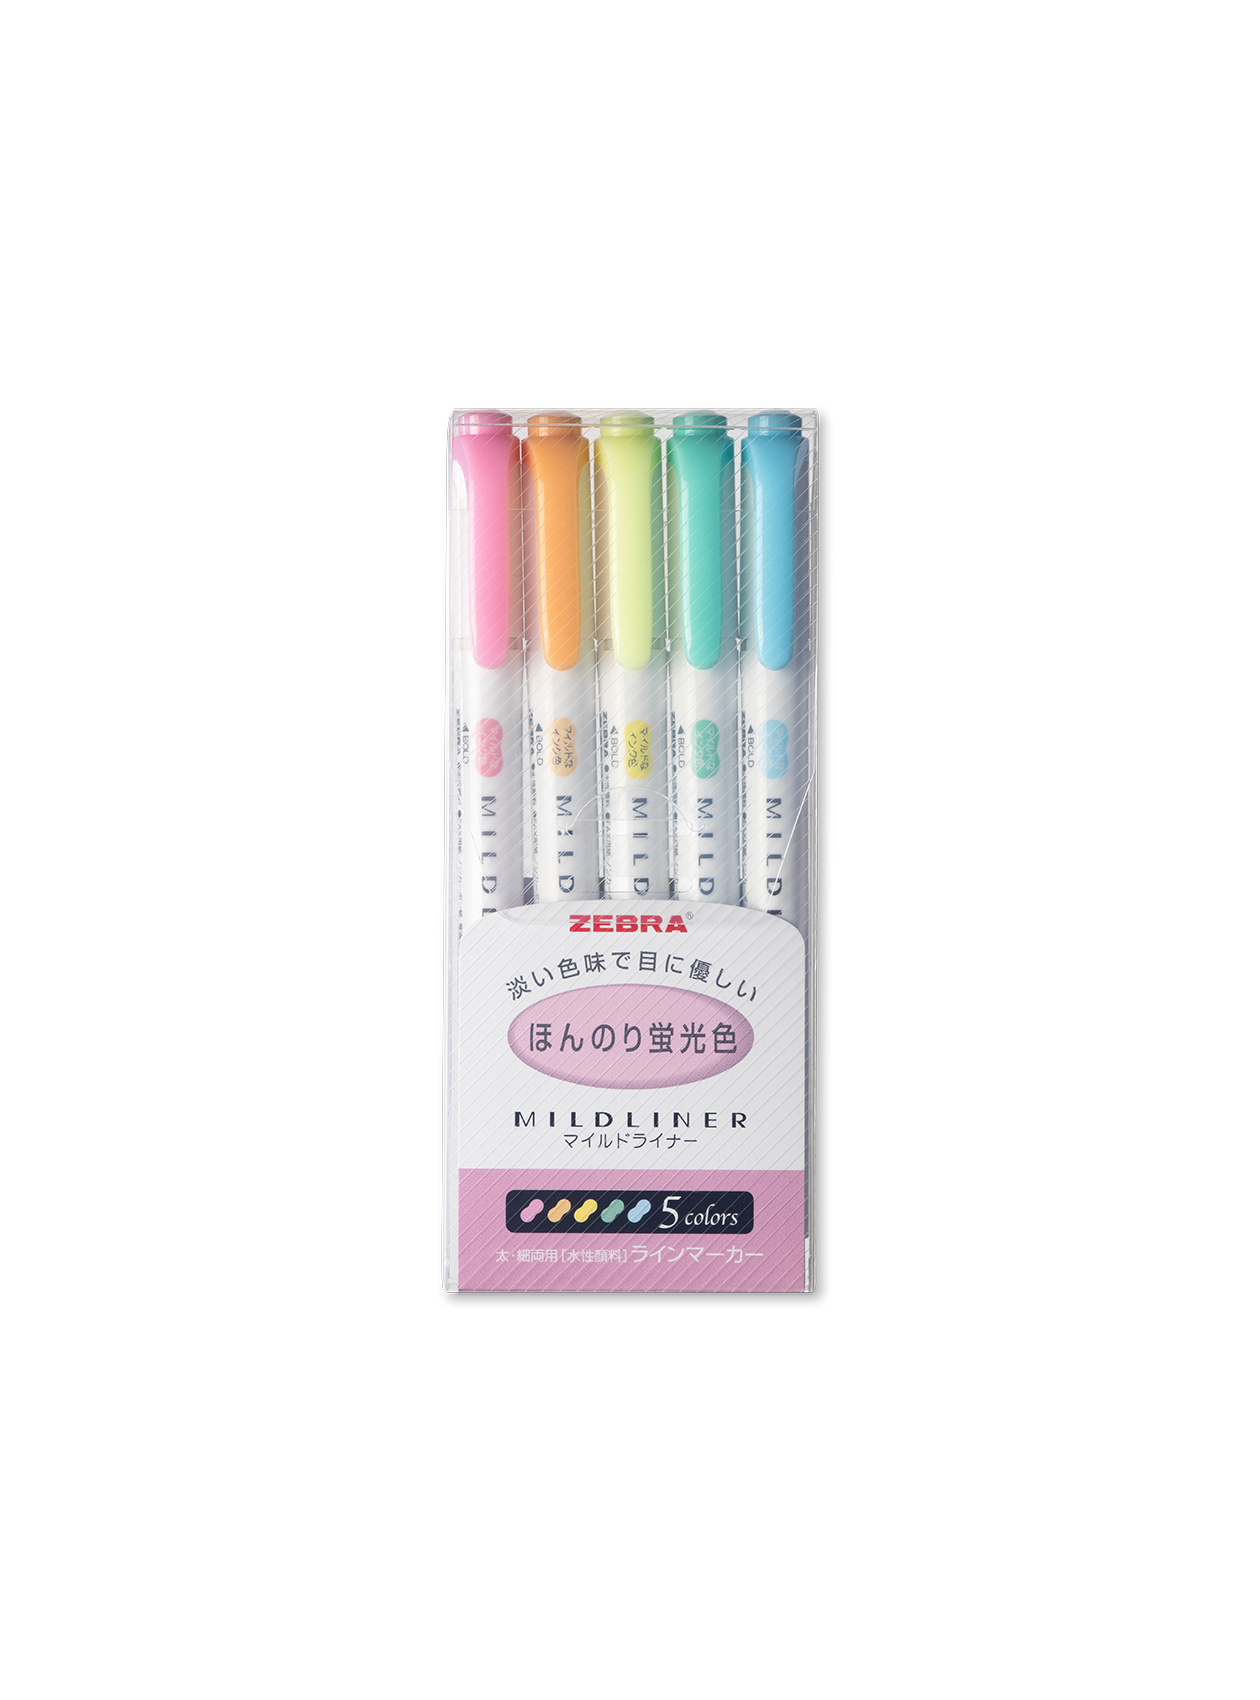 5 pastel mildliner set with double-sided highlighter inside packaging